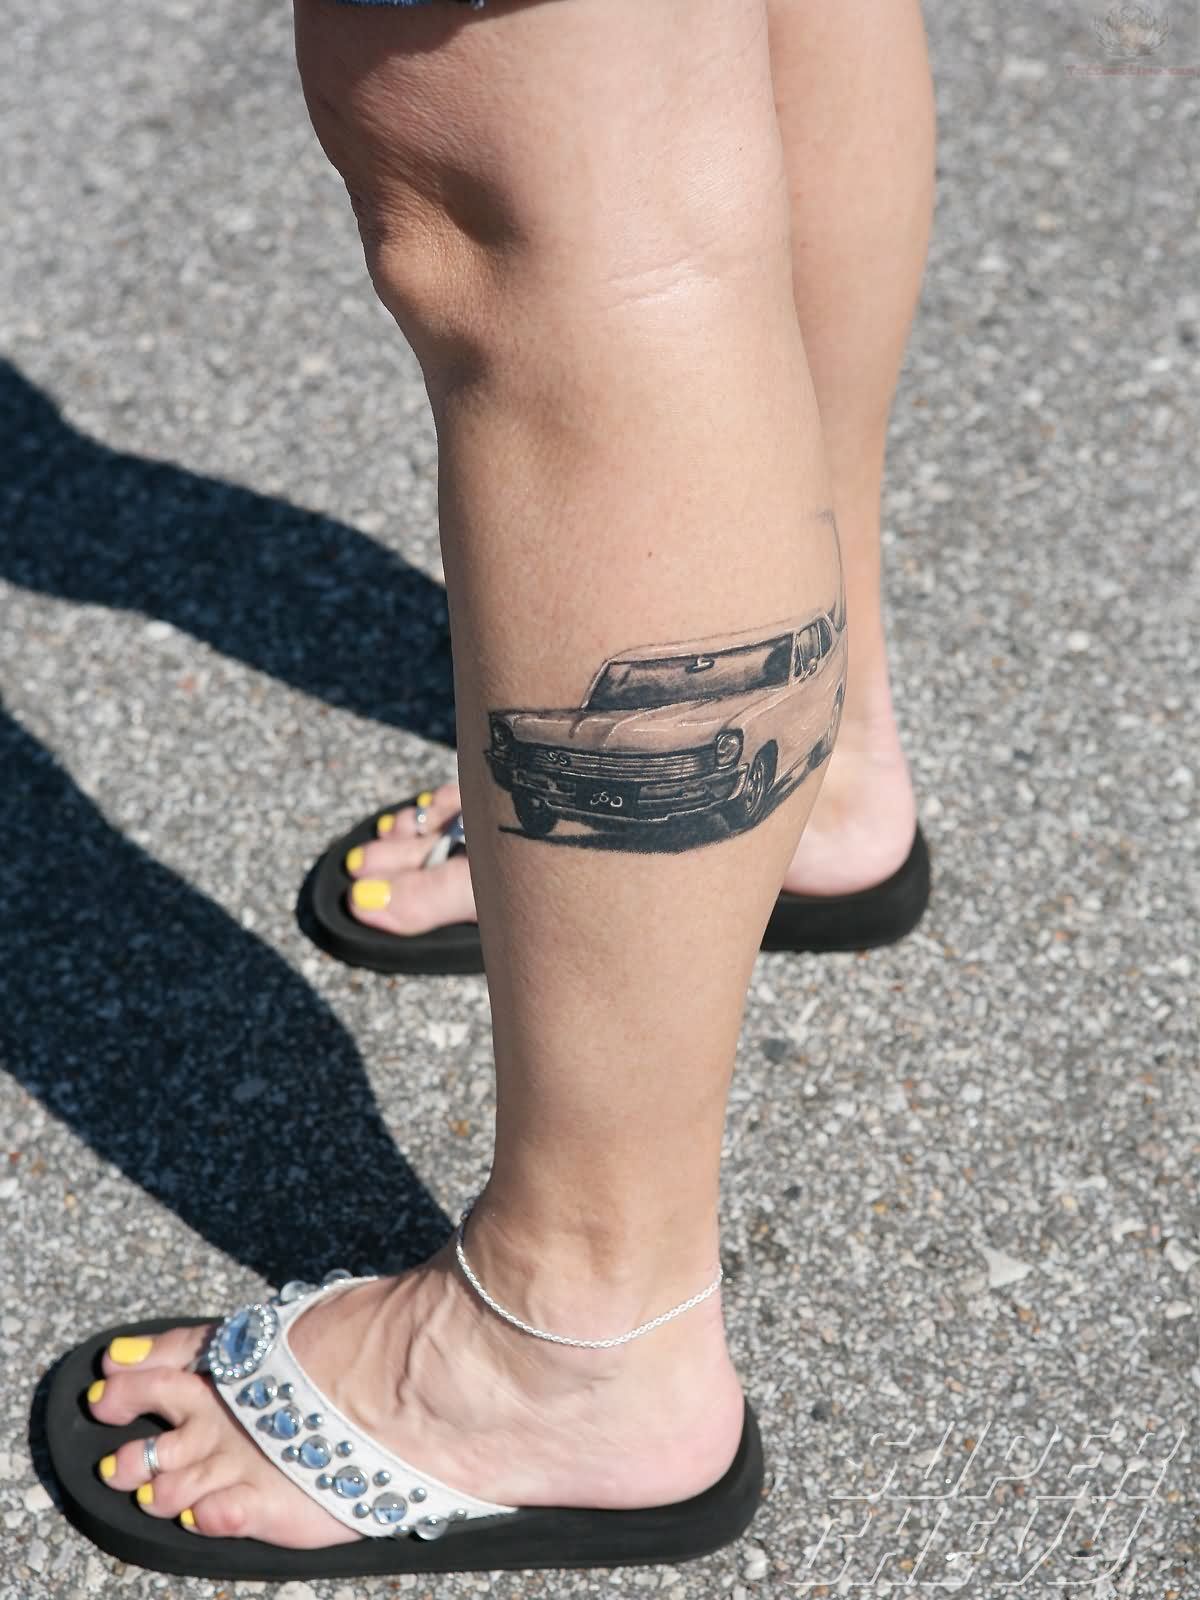 Classic Black And Grey Camaro Car Tattoo On Girl Left Leg Calf